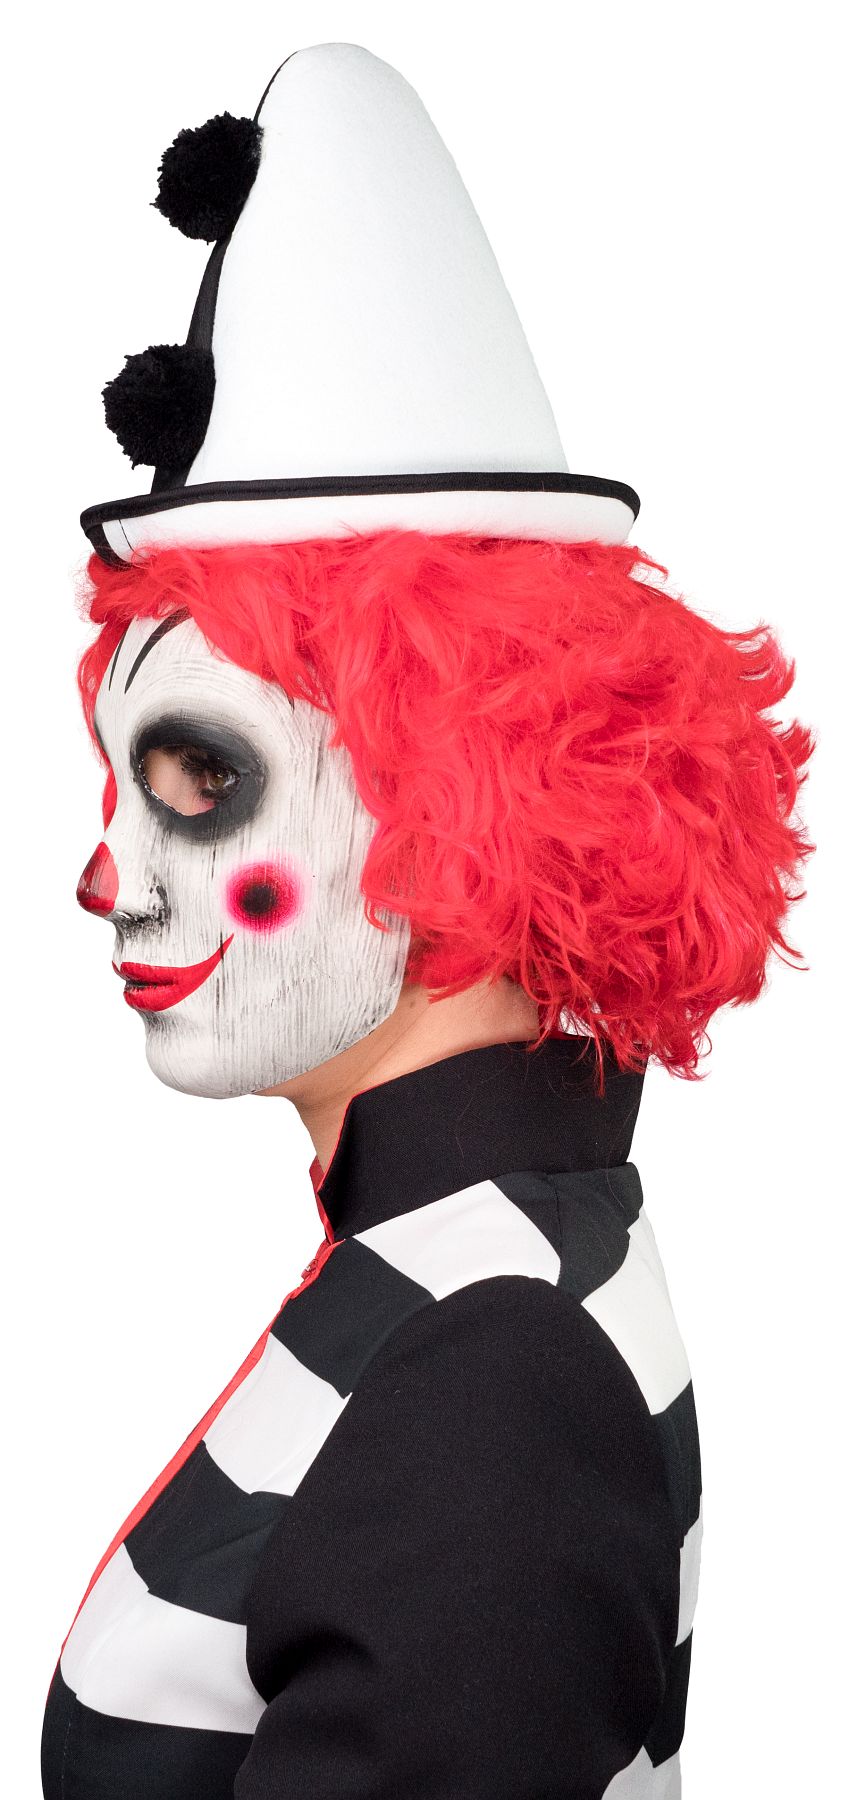 Venetian clown mask